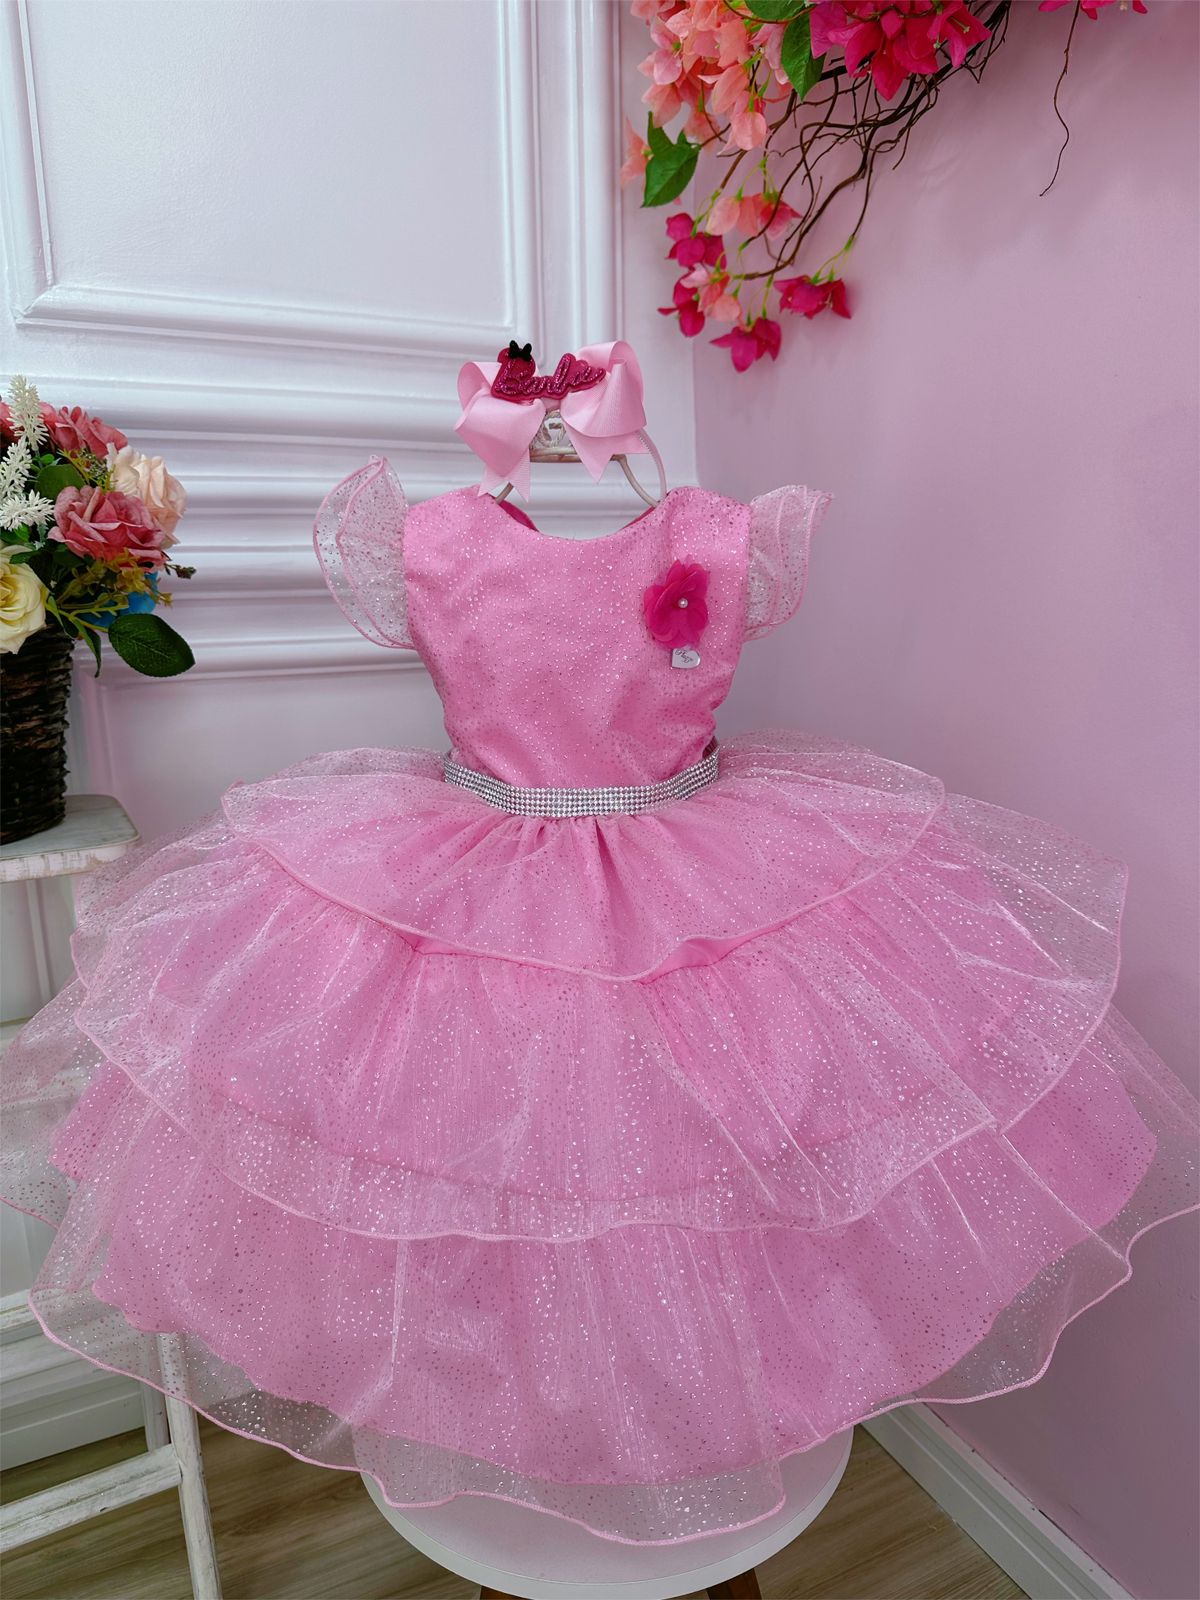 Vestido Infantil Barbie Rosa Glitter Cinto Strass Broche Flor